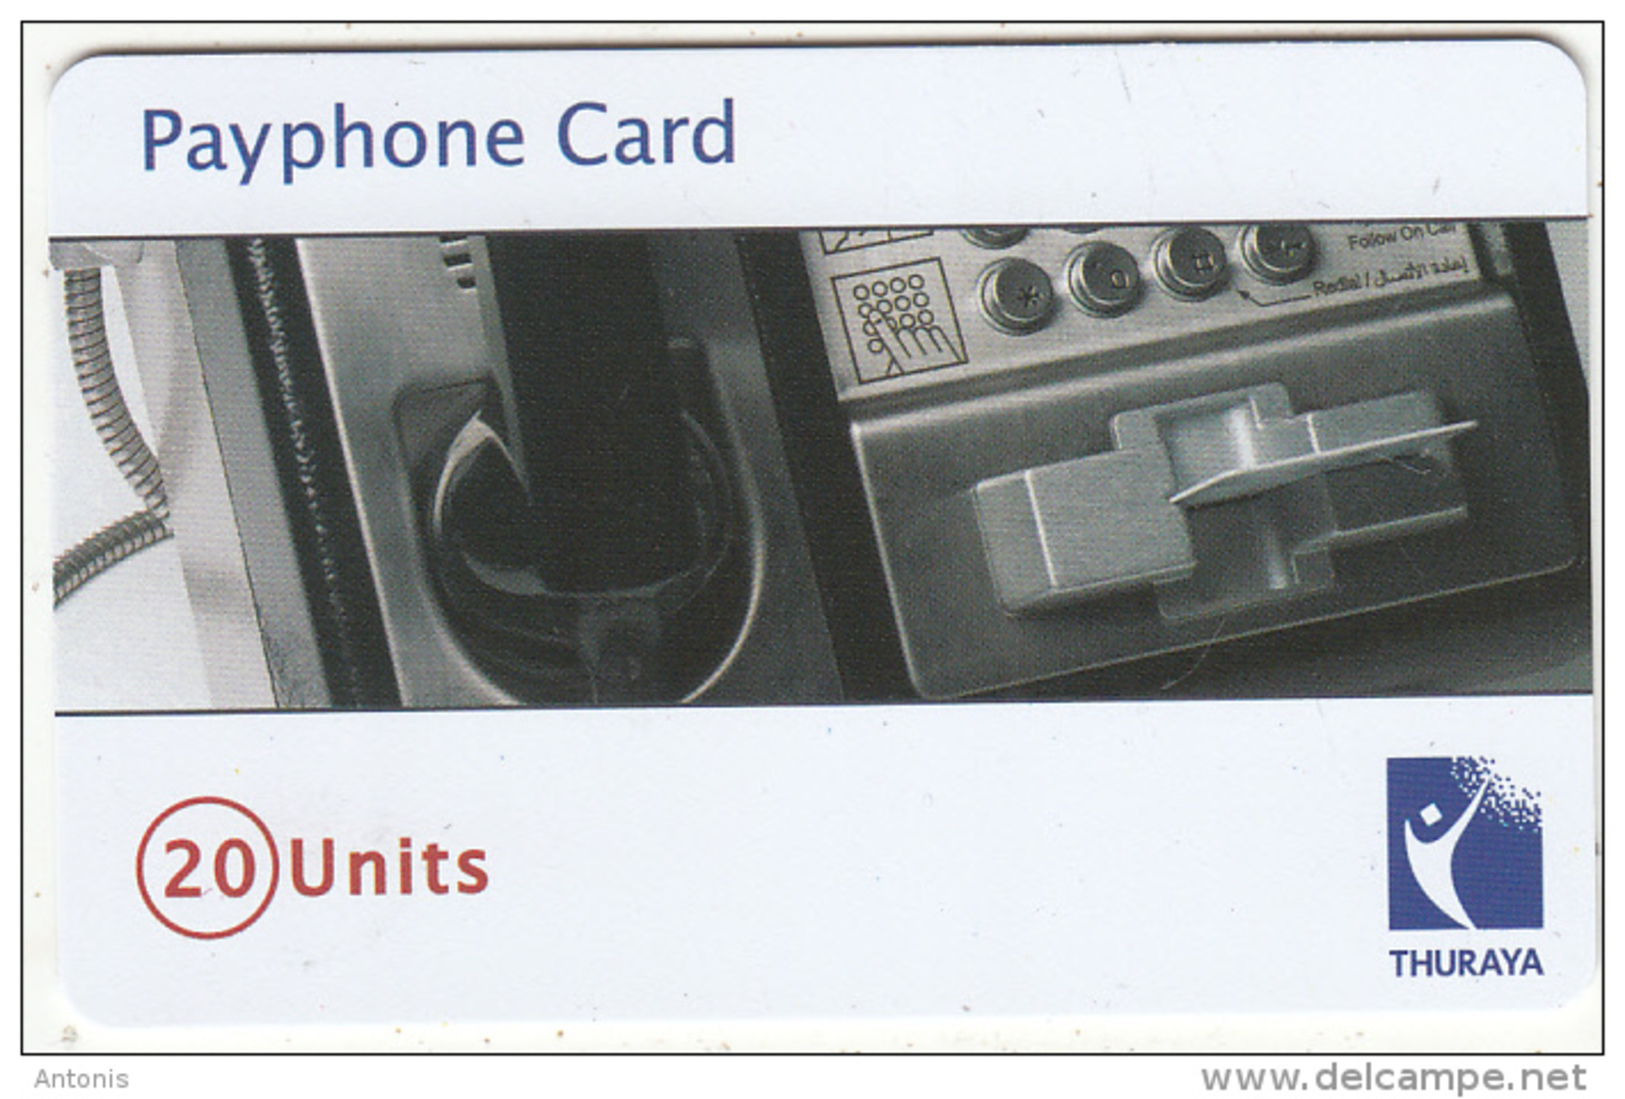 U.A.E. - Thuraya Cardphone, Thuraya Telecom(Mobile Satellite Communications) Telecard 20 Units, Sample(no Chip, No CN) - Telephones